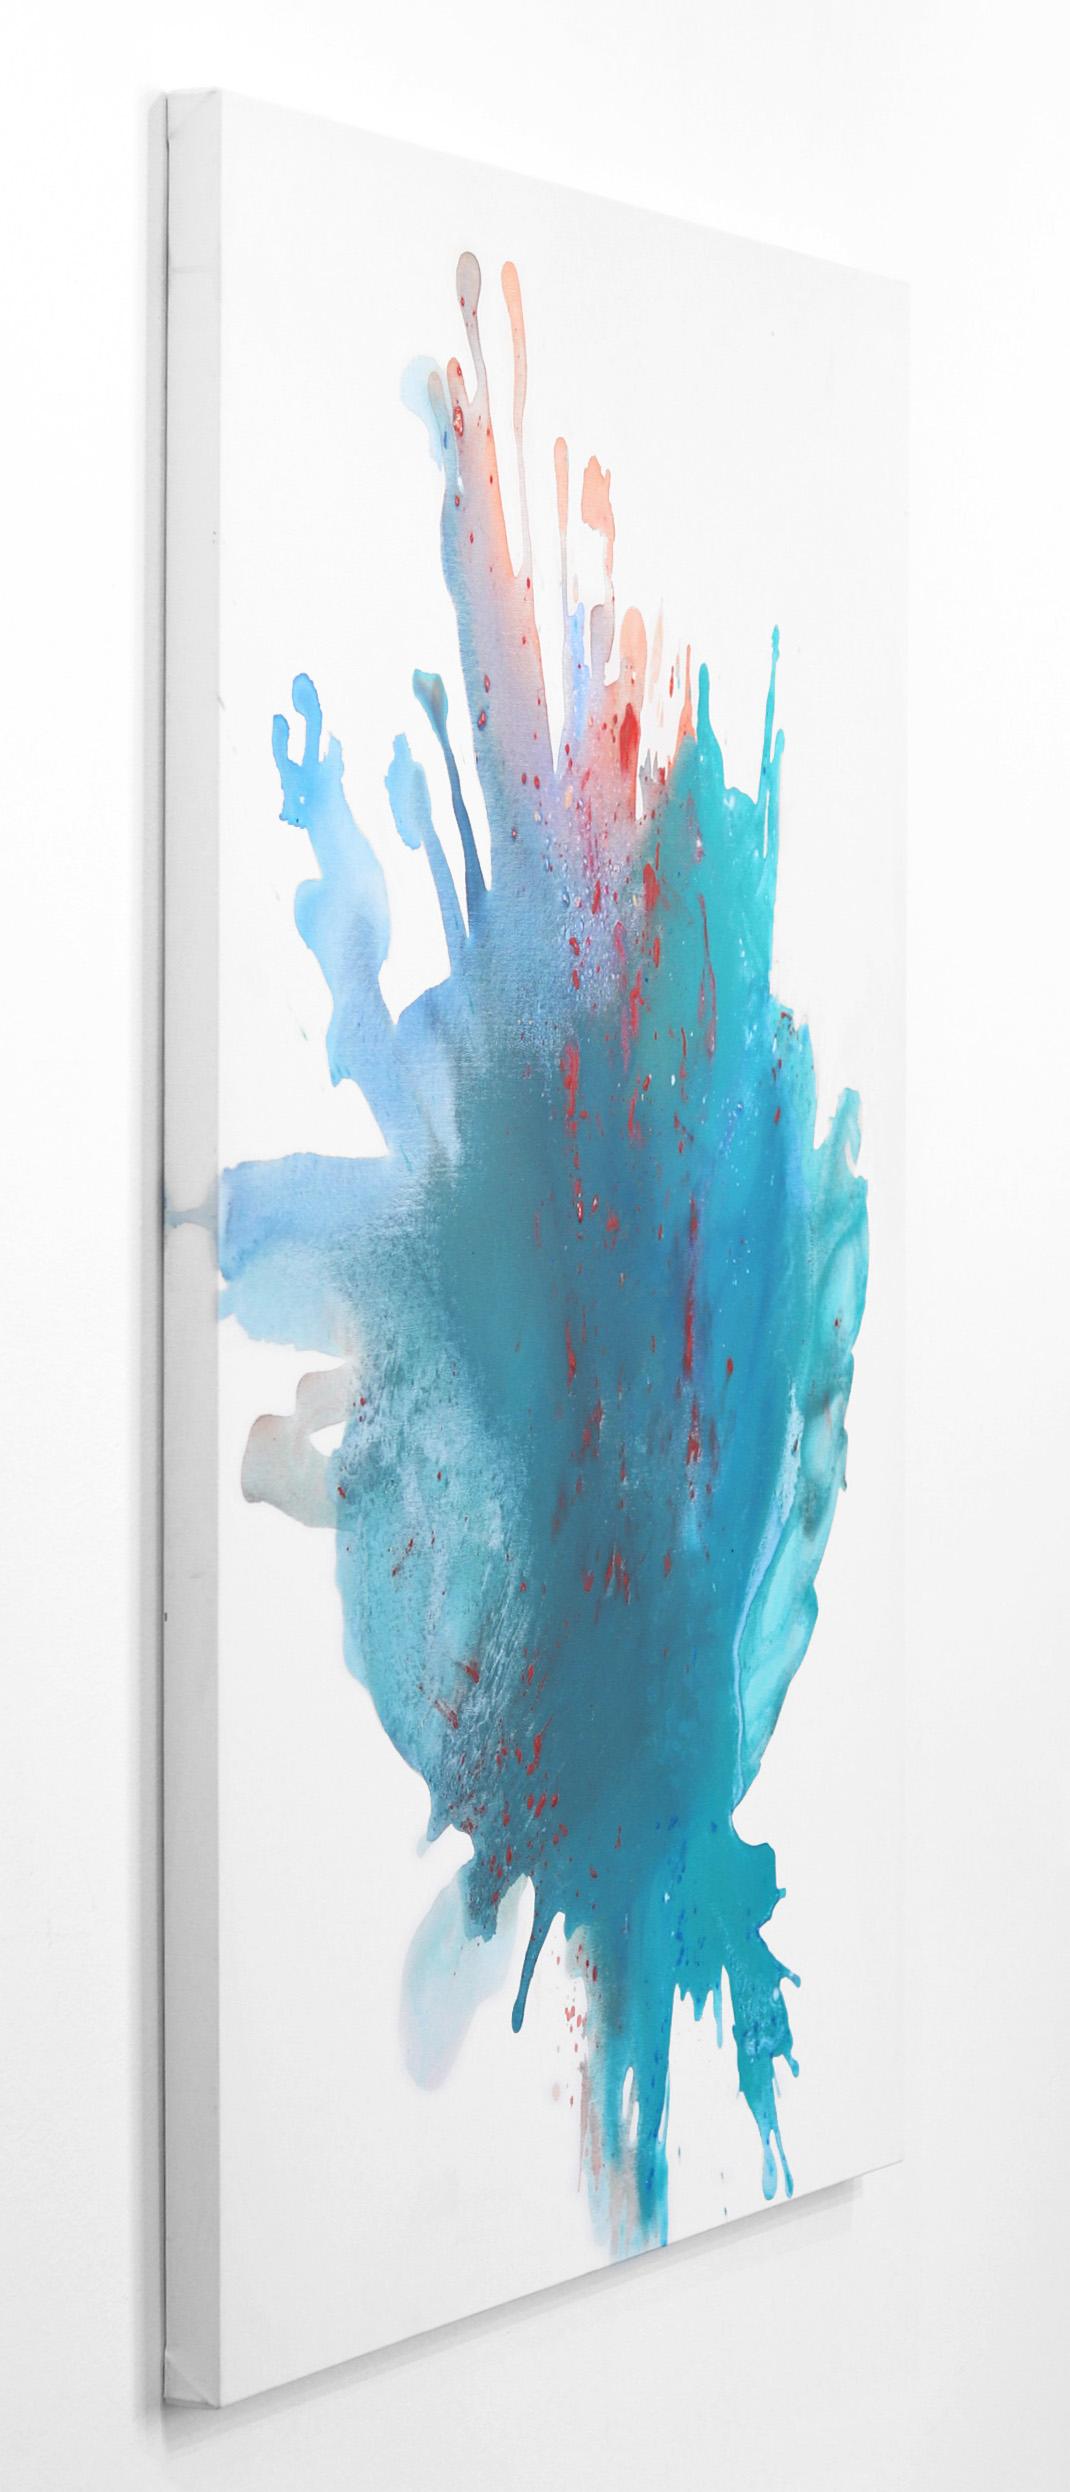 Blossom - Grand paysage aquatique minimaliste à éclabousssures - Bleu Abstract Painting par Clara Berta